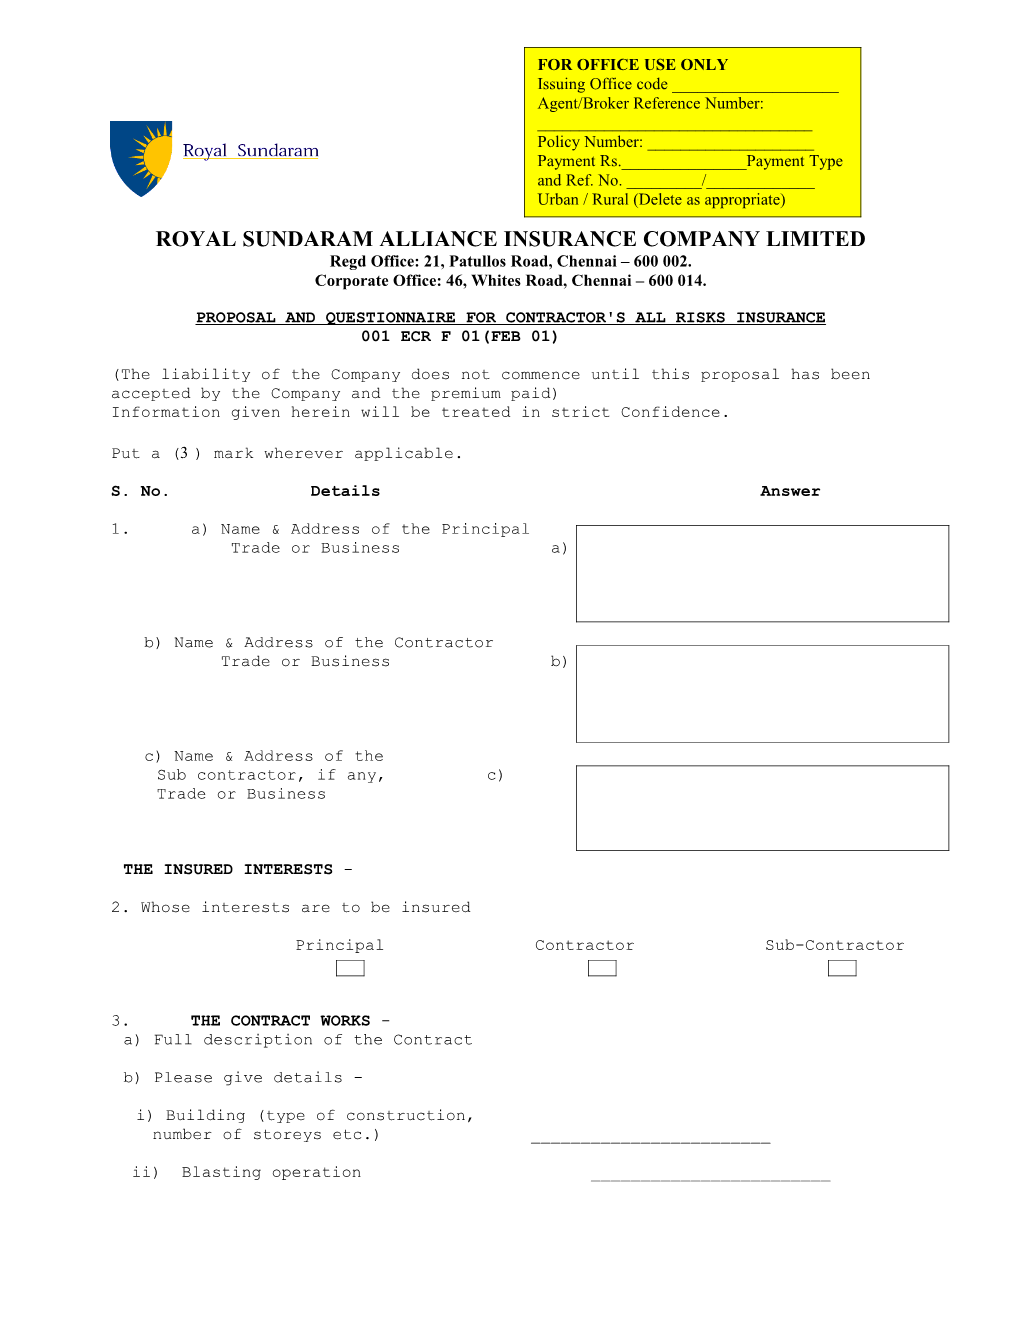 Royal Sundaram Alliance Insurance Company Limited